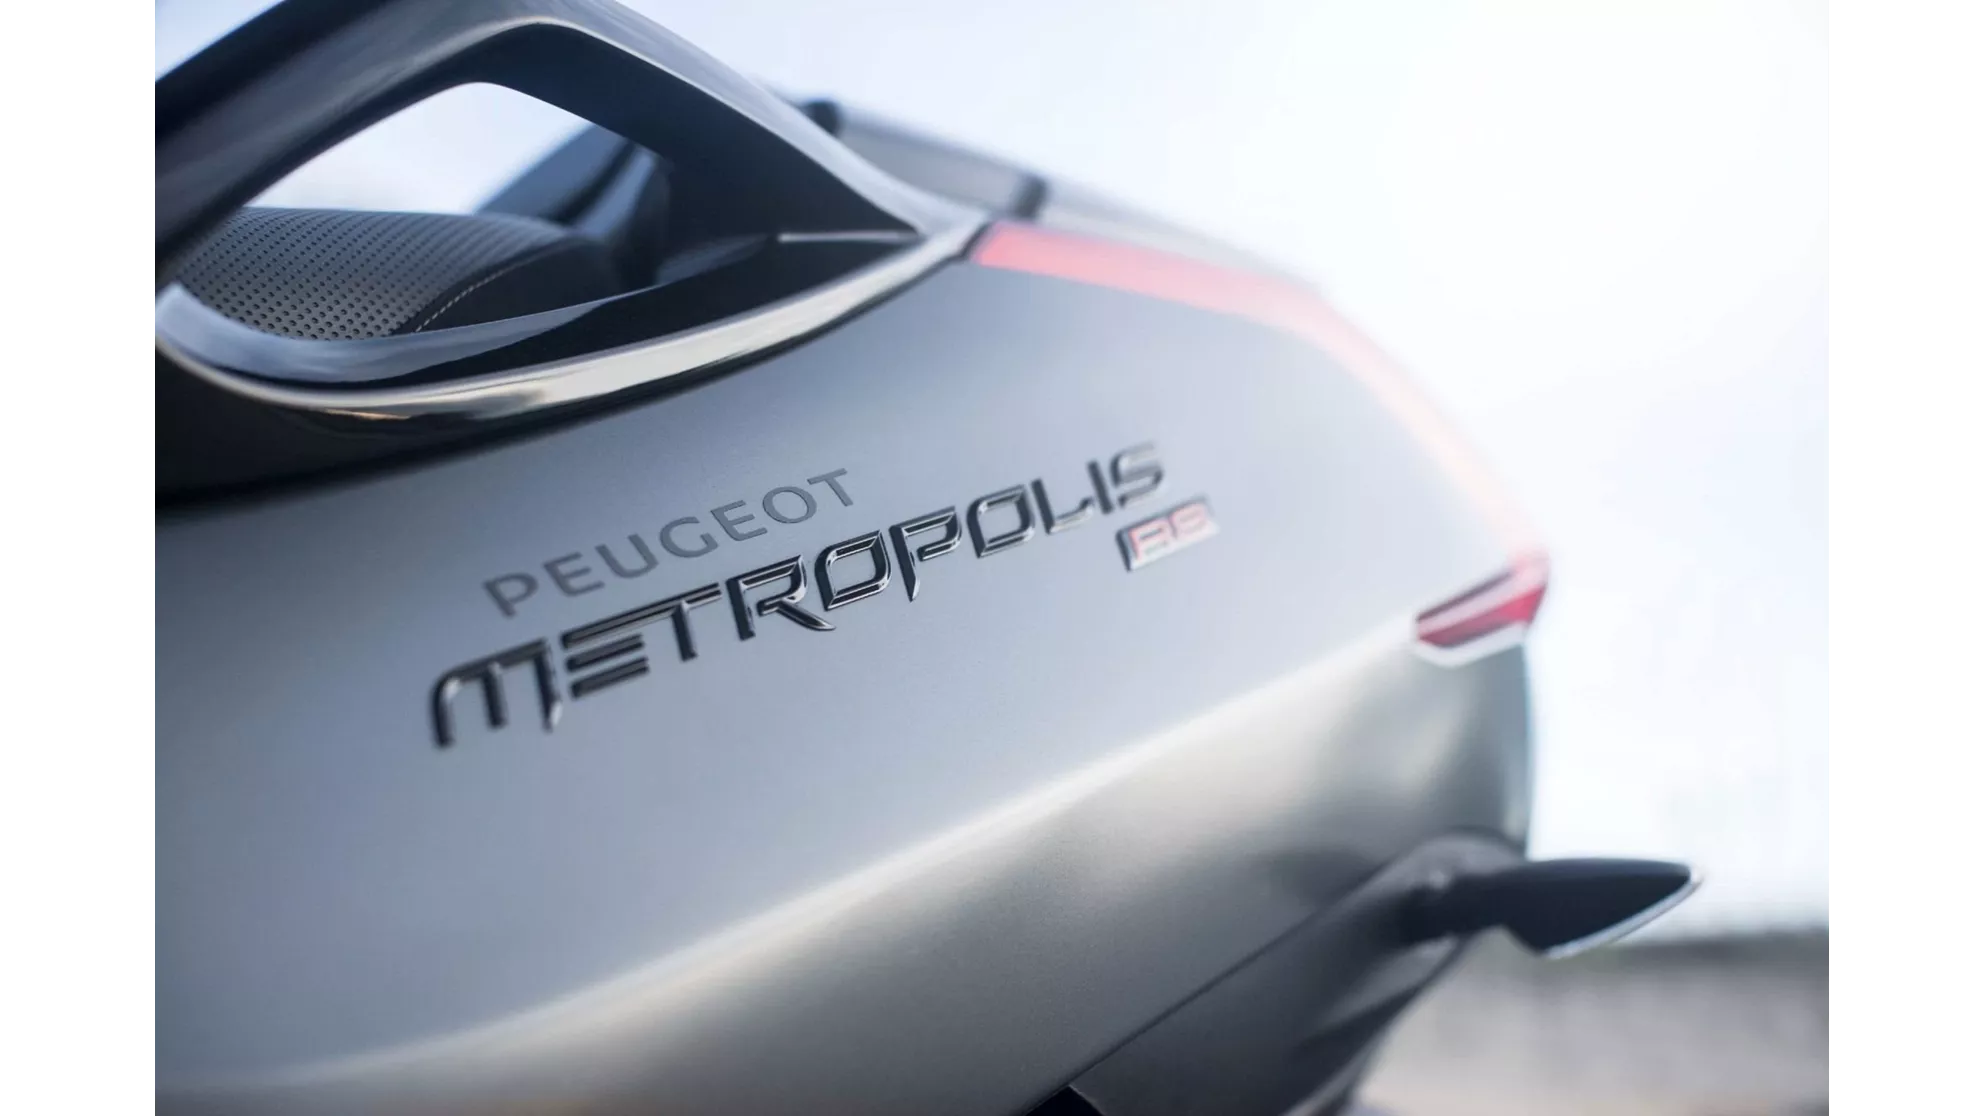 Peugeot Metropolis 400i RS - Image 22